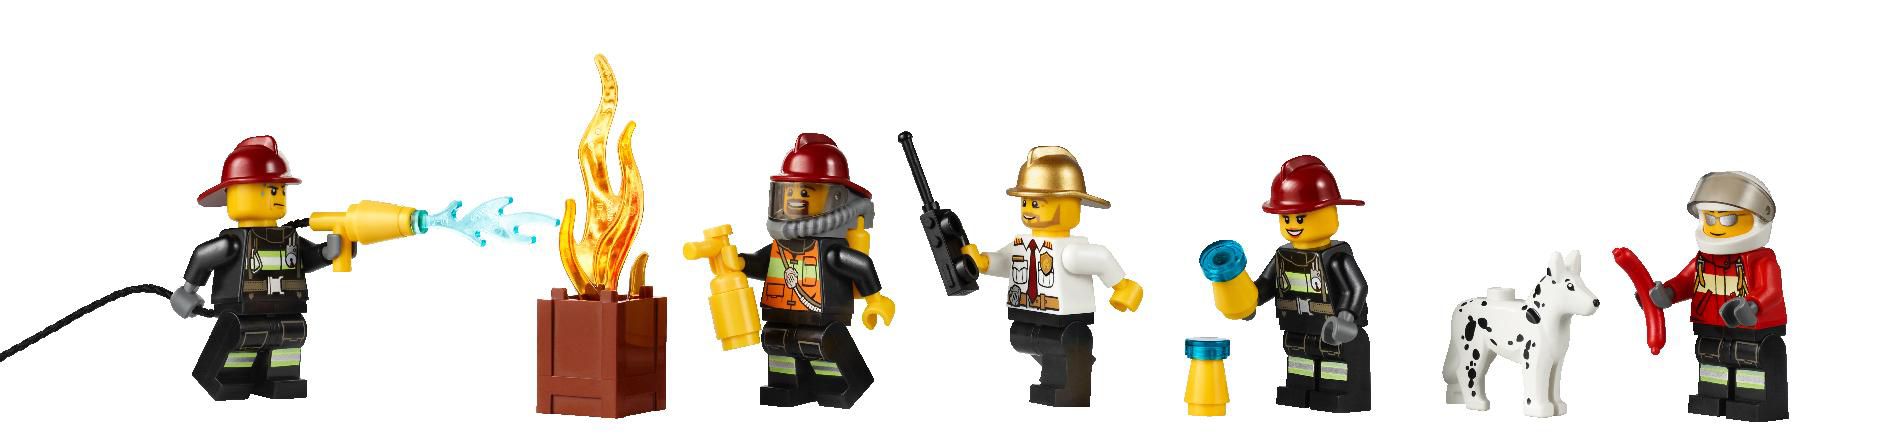 LEGO CITY Fire Station #60004   Toys & Games   Blocks & Building Sets